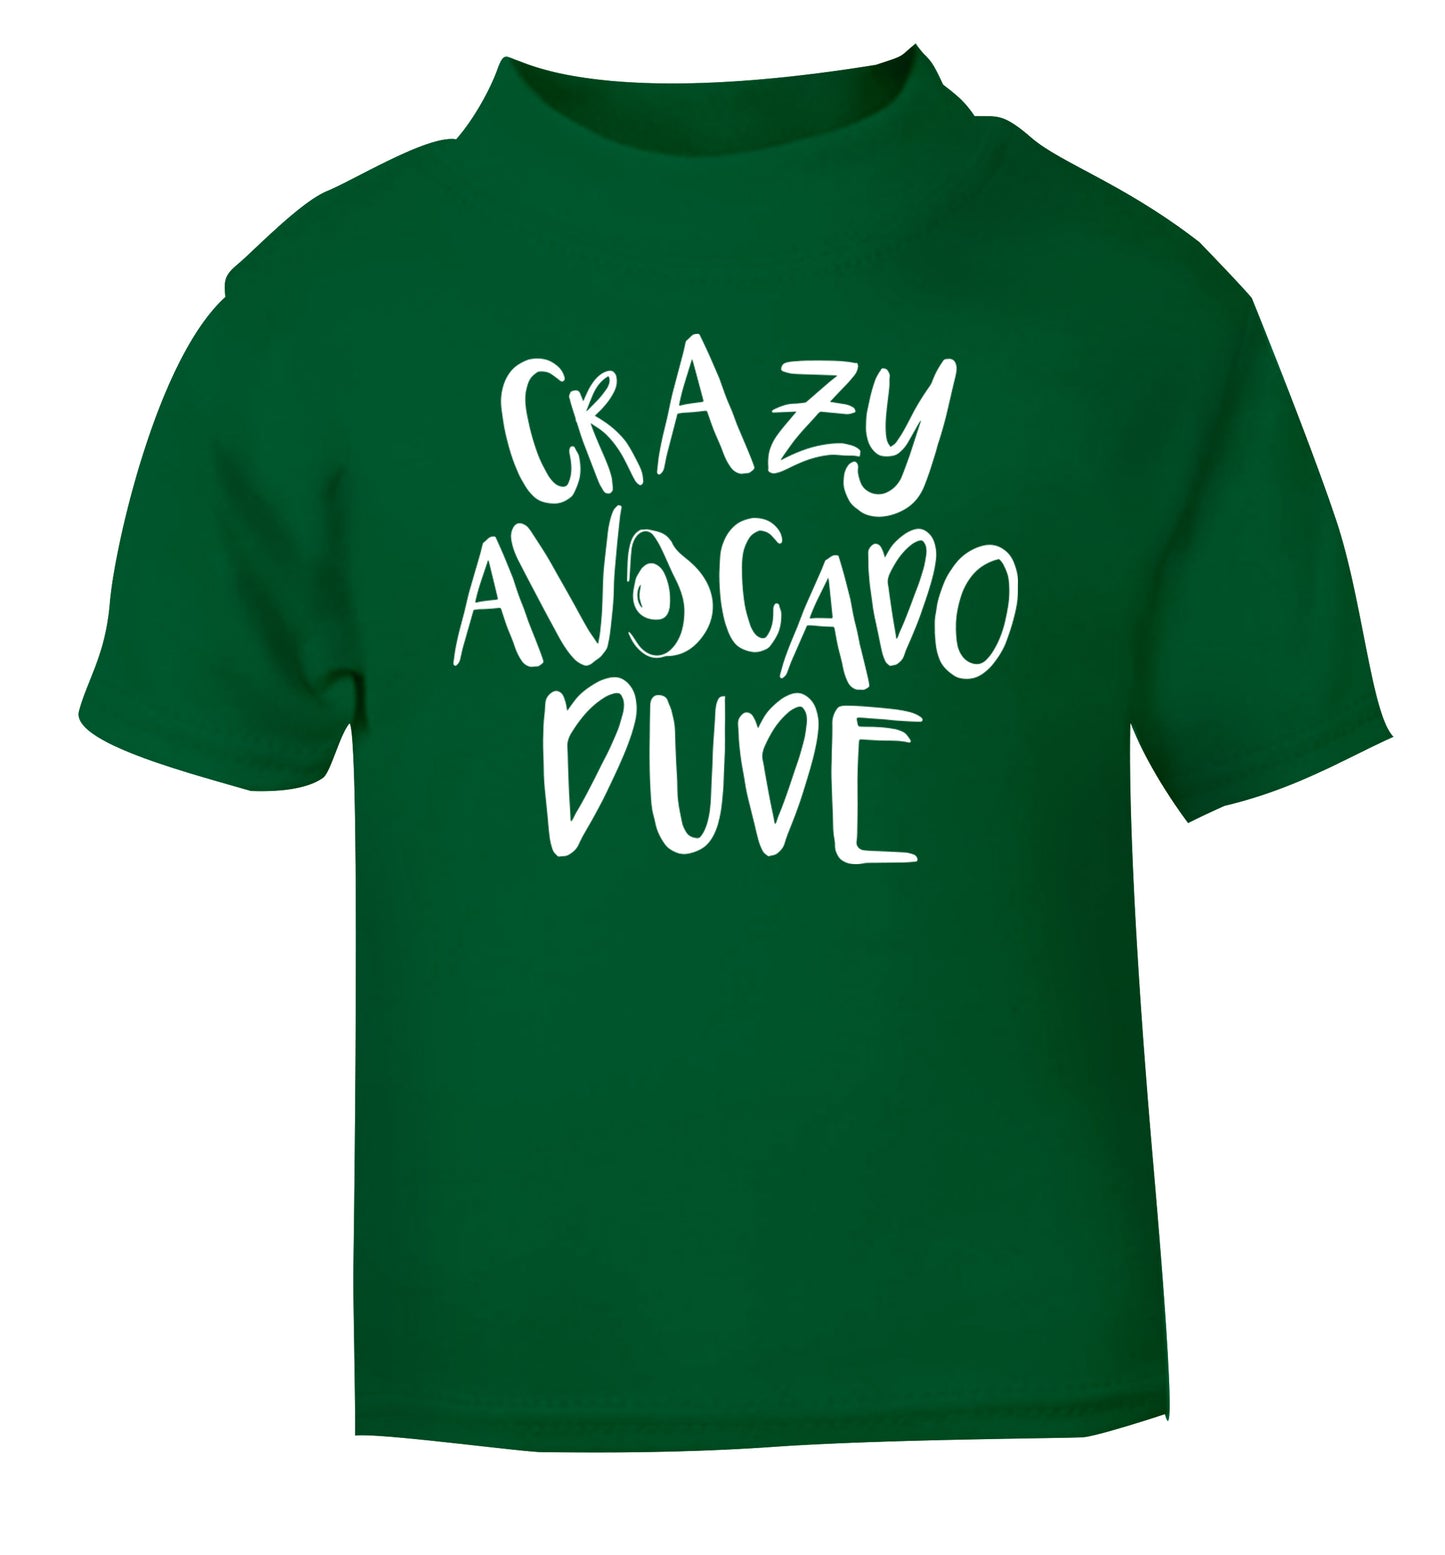 Crazy avocado dude green Baby Toddler Tshirt 2 Years